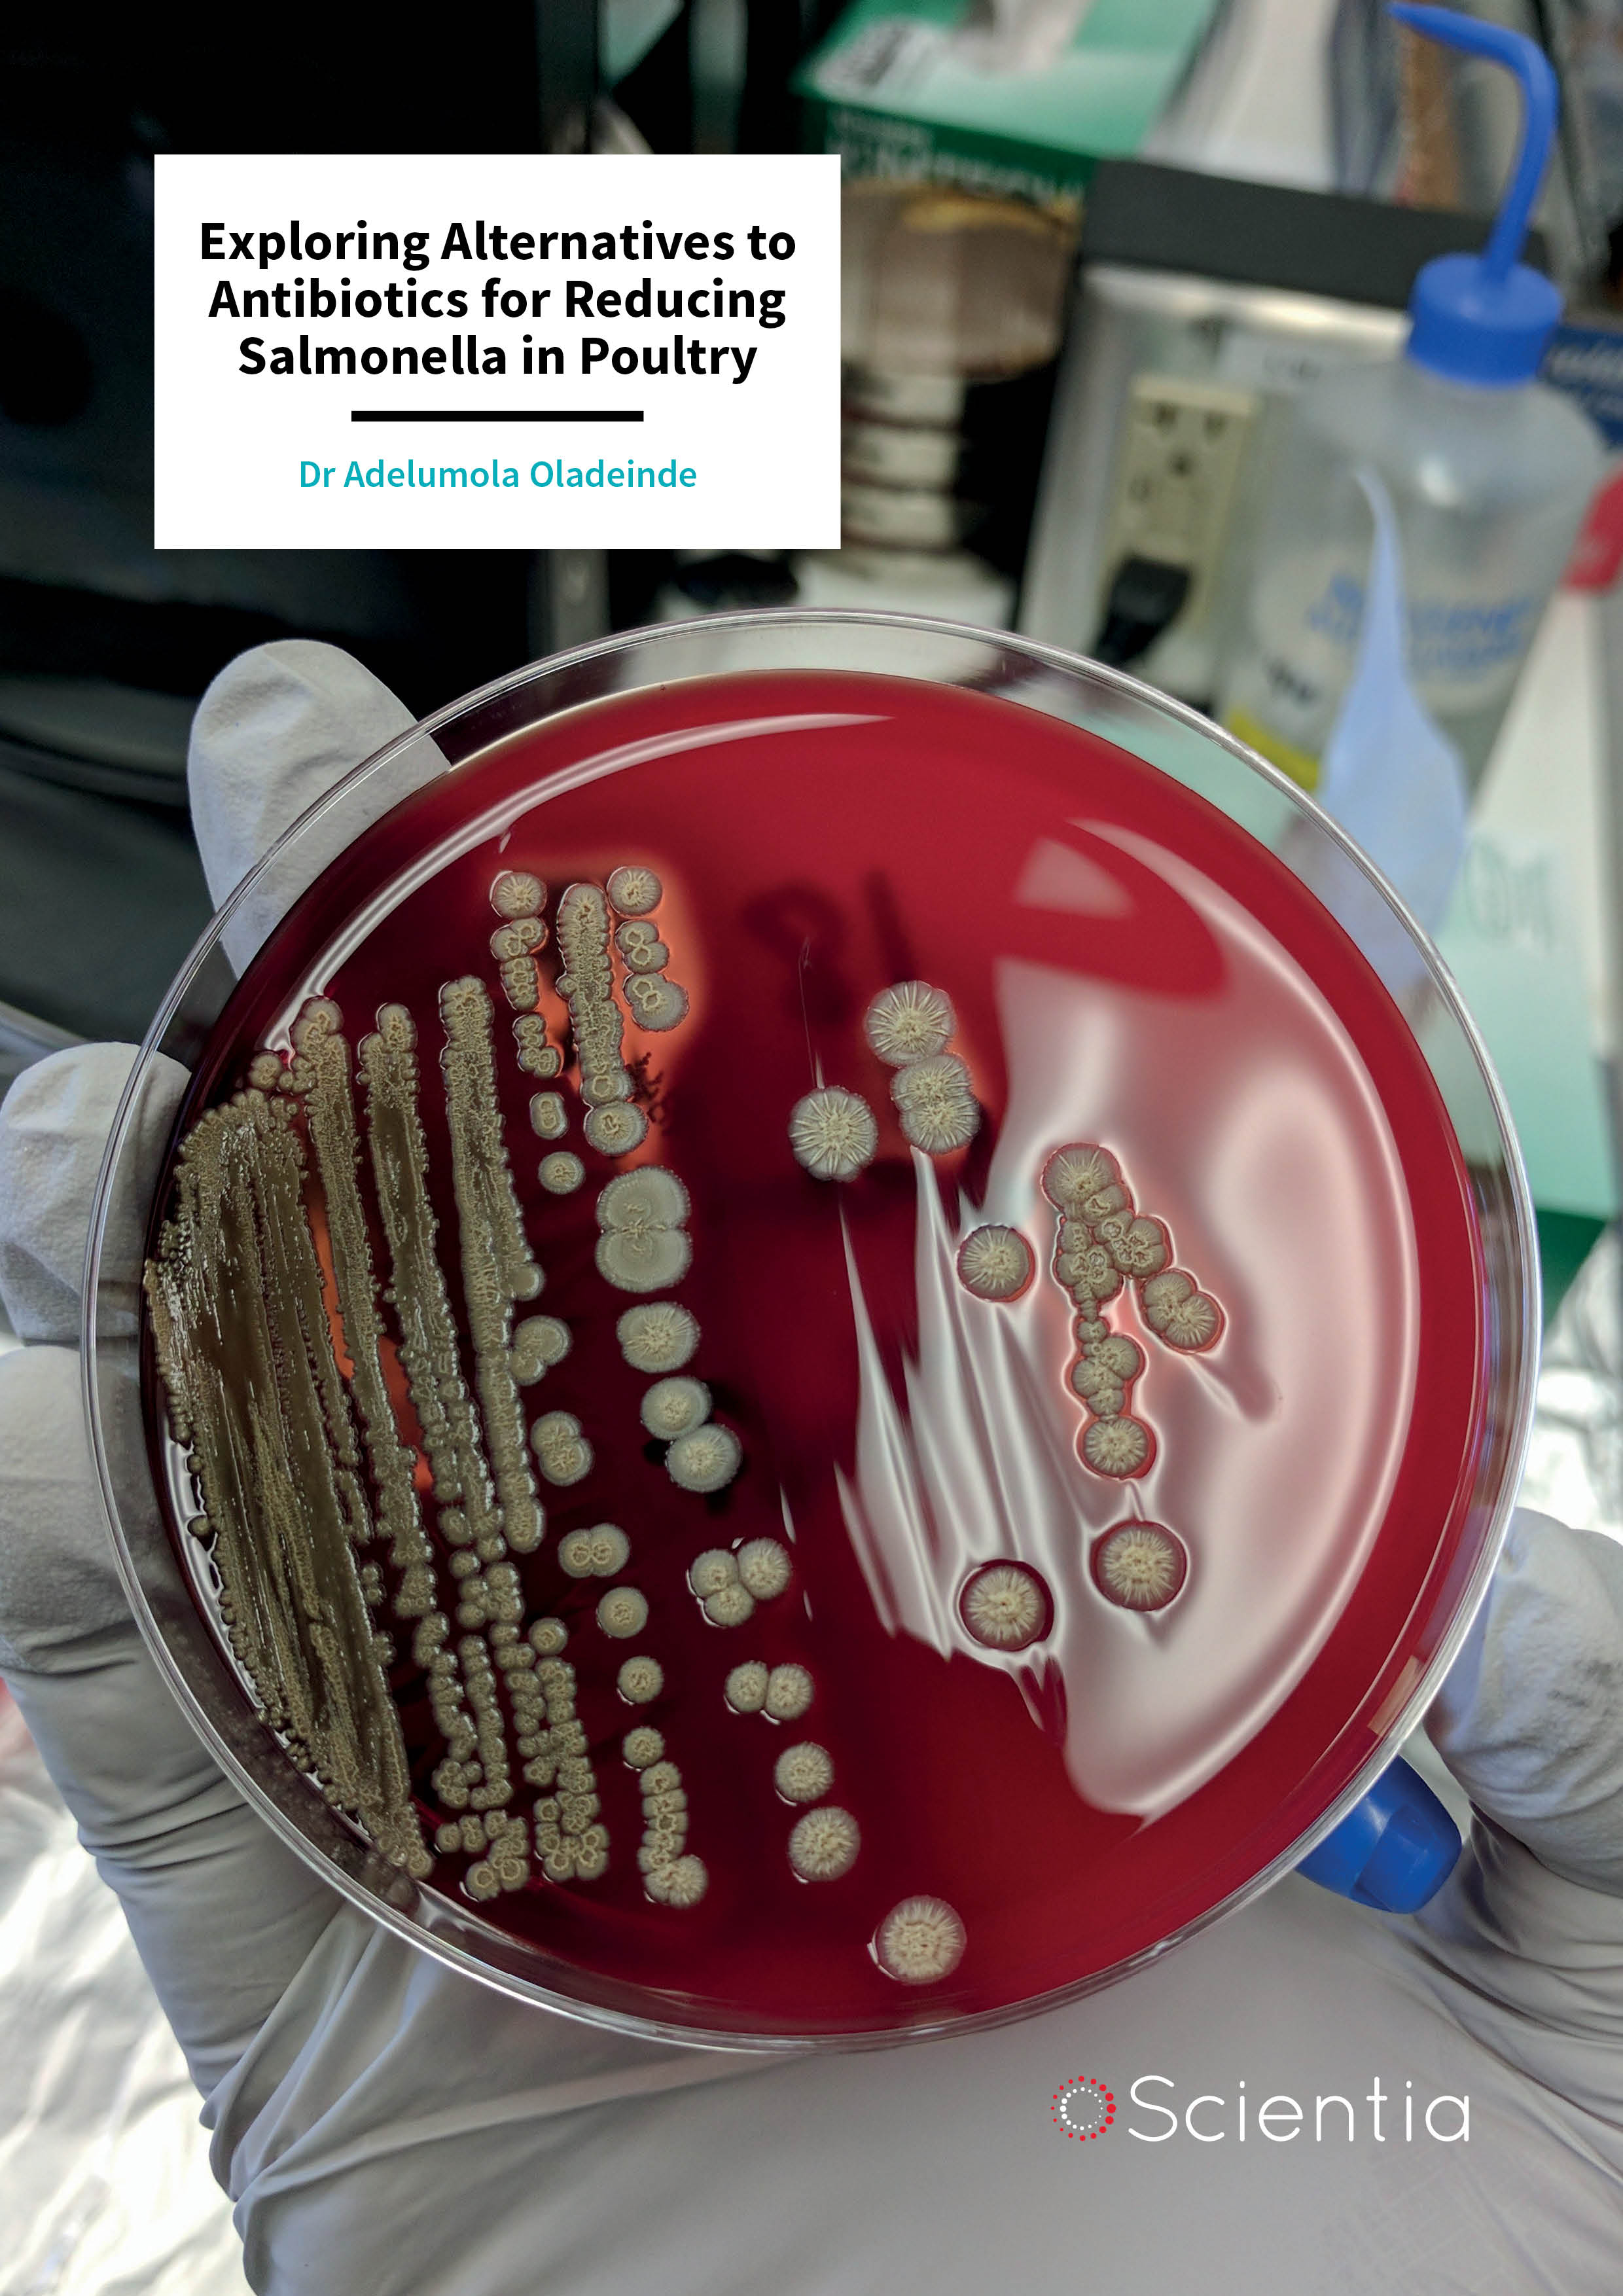 Dr Adelumola Oladeinde – Exploring Alternatives to Antibiotics for Reducing Salmonella in Poultry